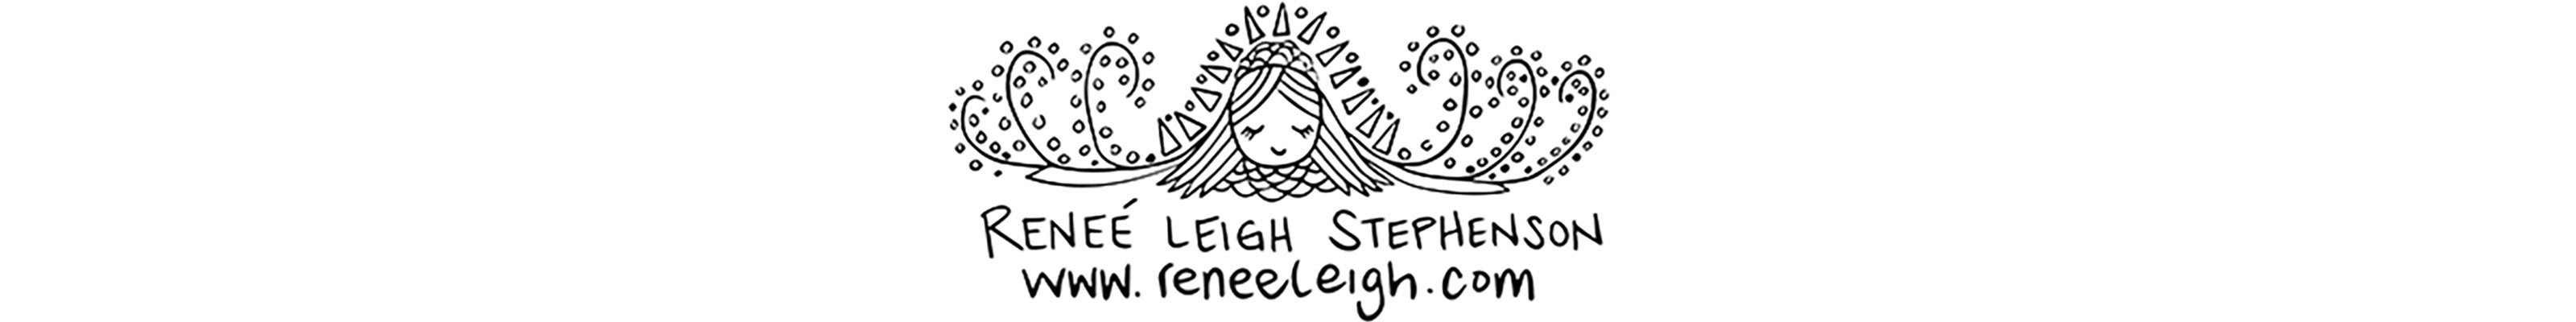 Renee Leigh Stephenson's profile banner